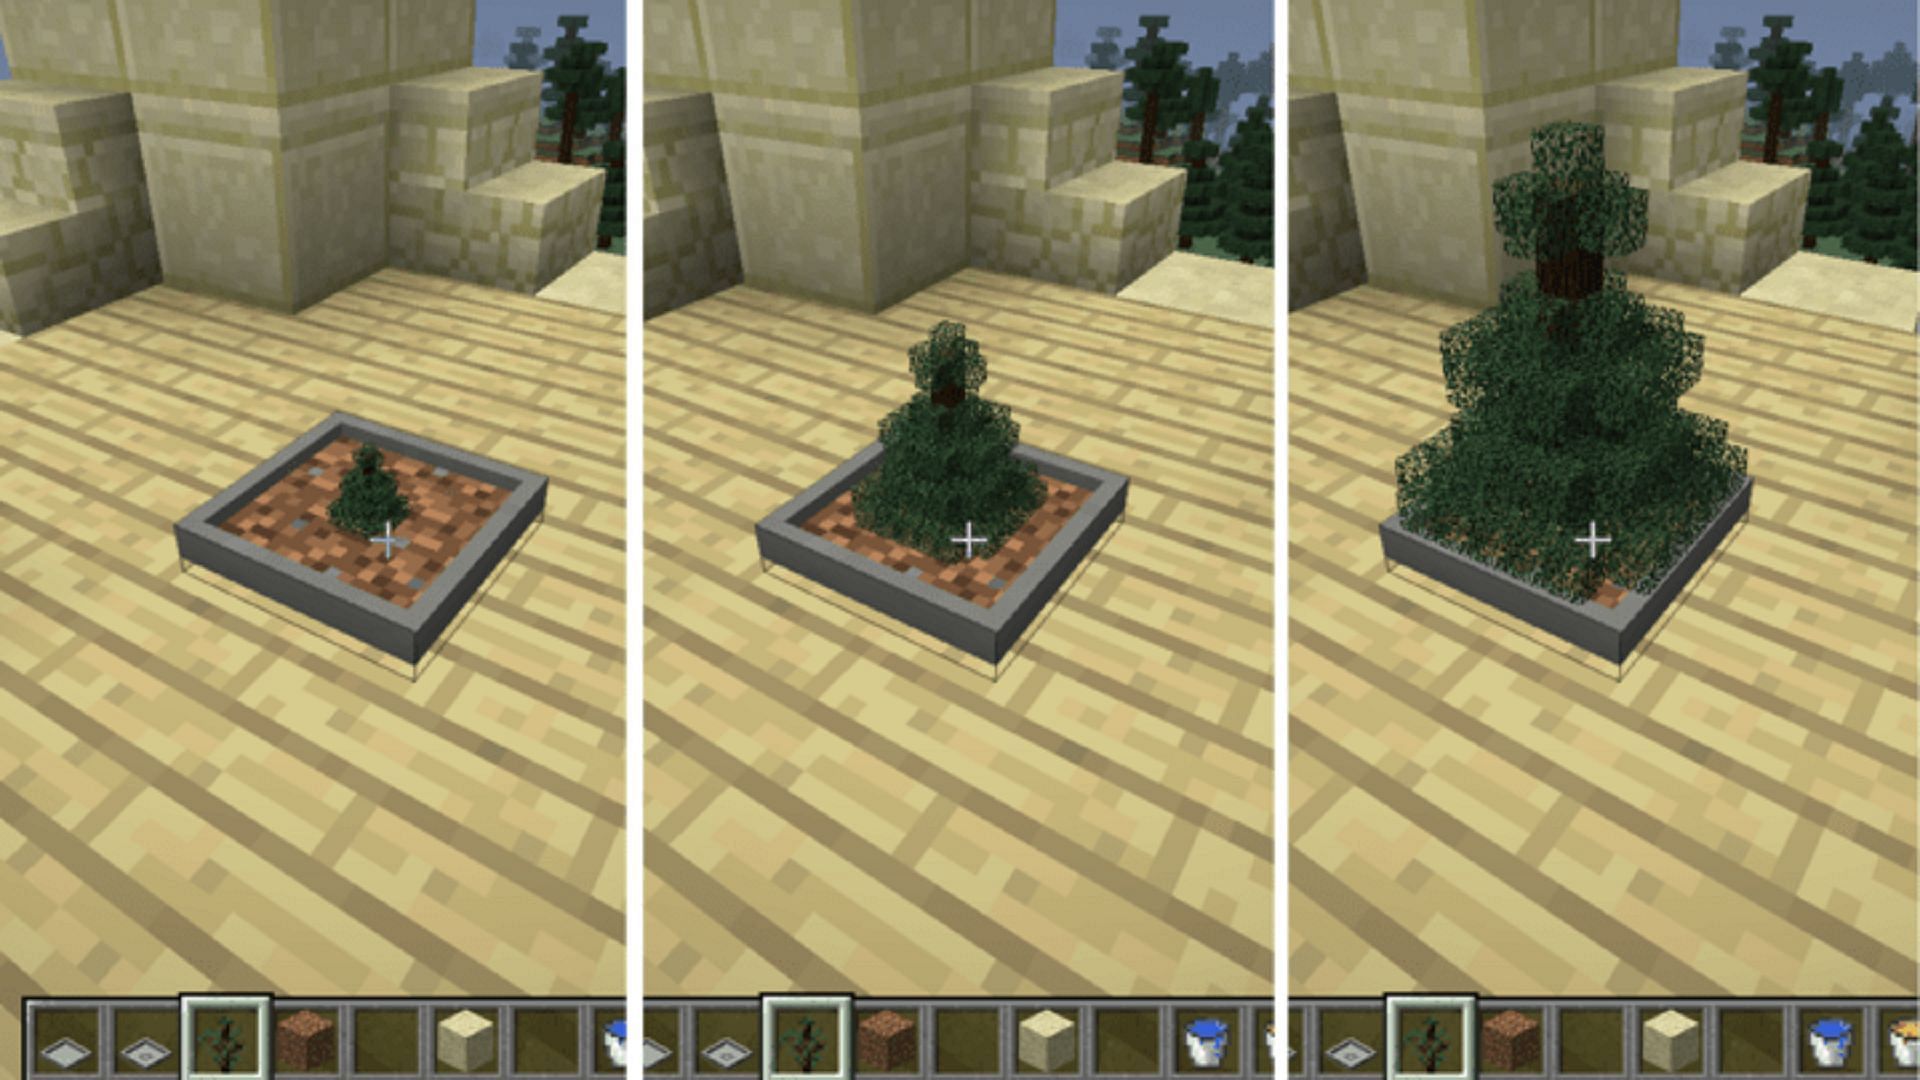 A Bonsai Tree grows in its planter box via Bonsai Planters 3 (Image via Davenonymous/Minecraftmods.com)